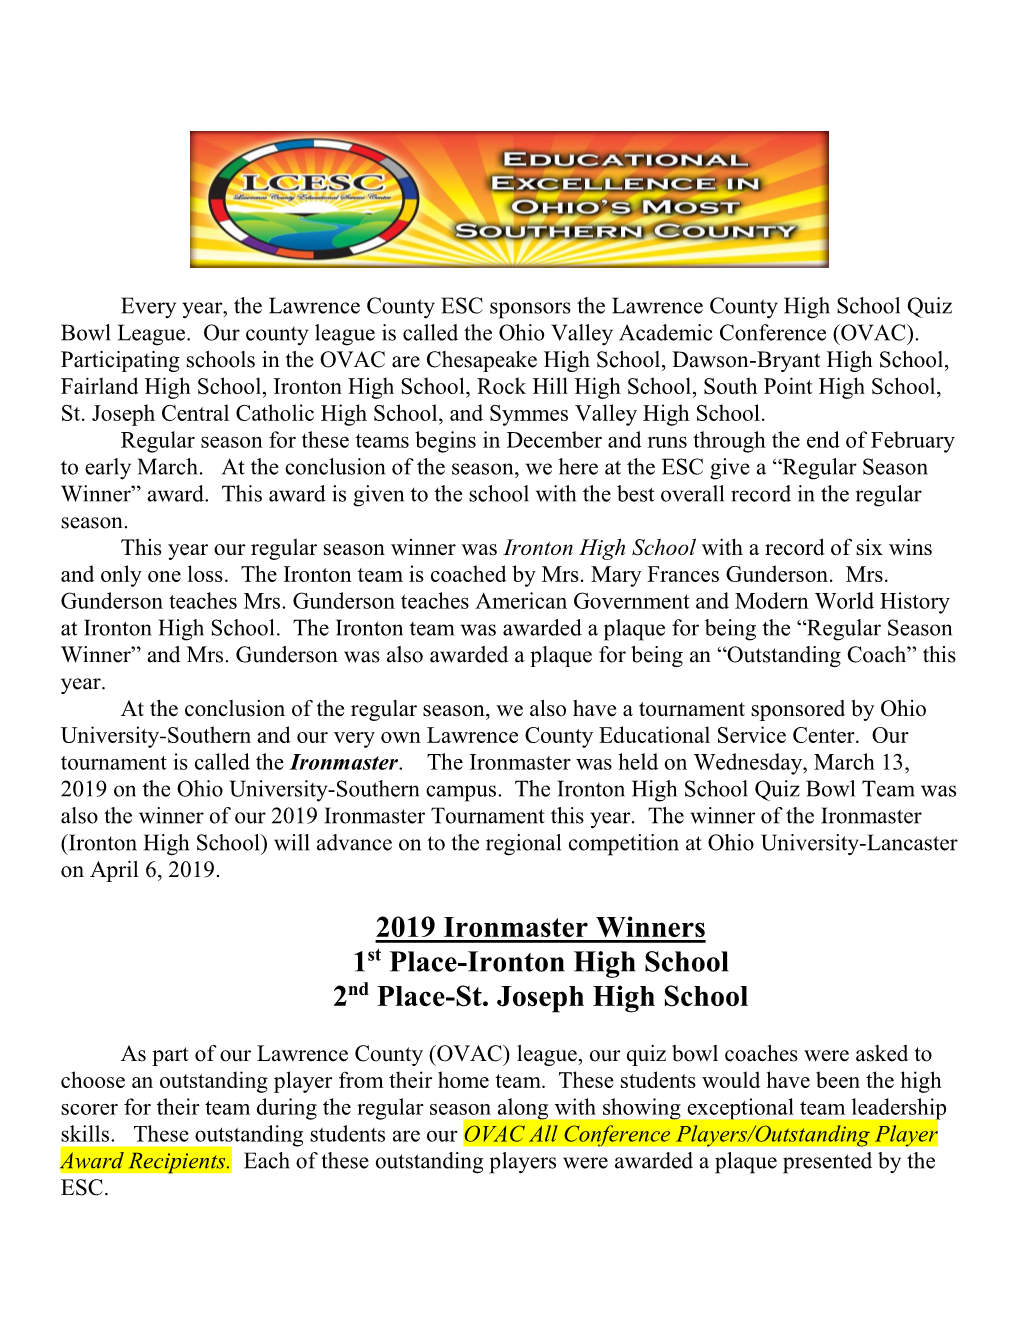 2019 Ironmaster Winners 1St Place-Ironton High School 2Nd Place-St